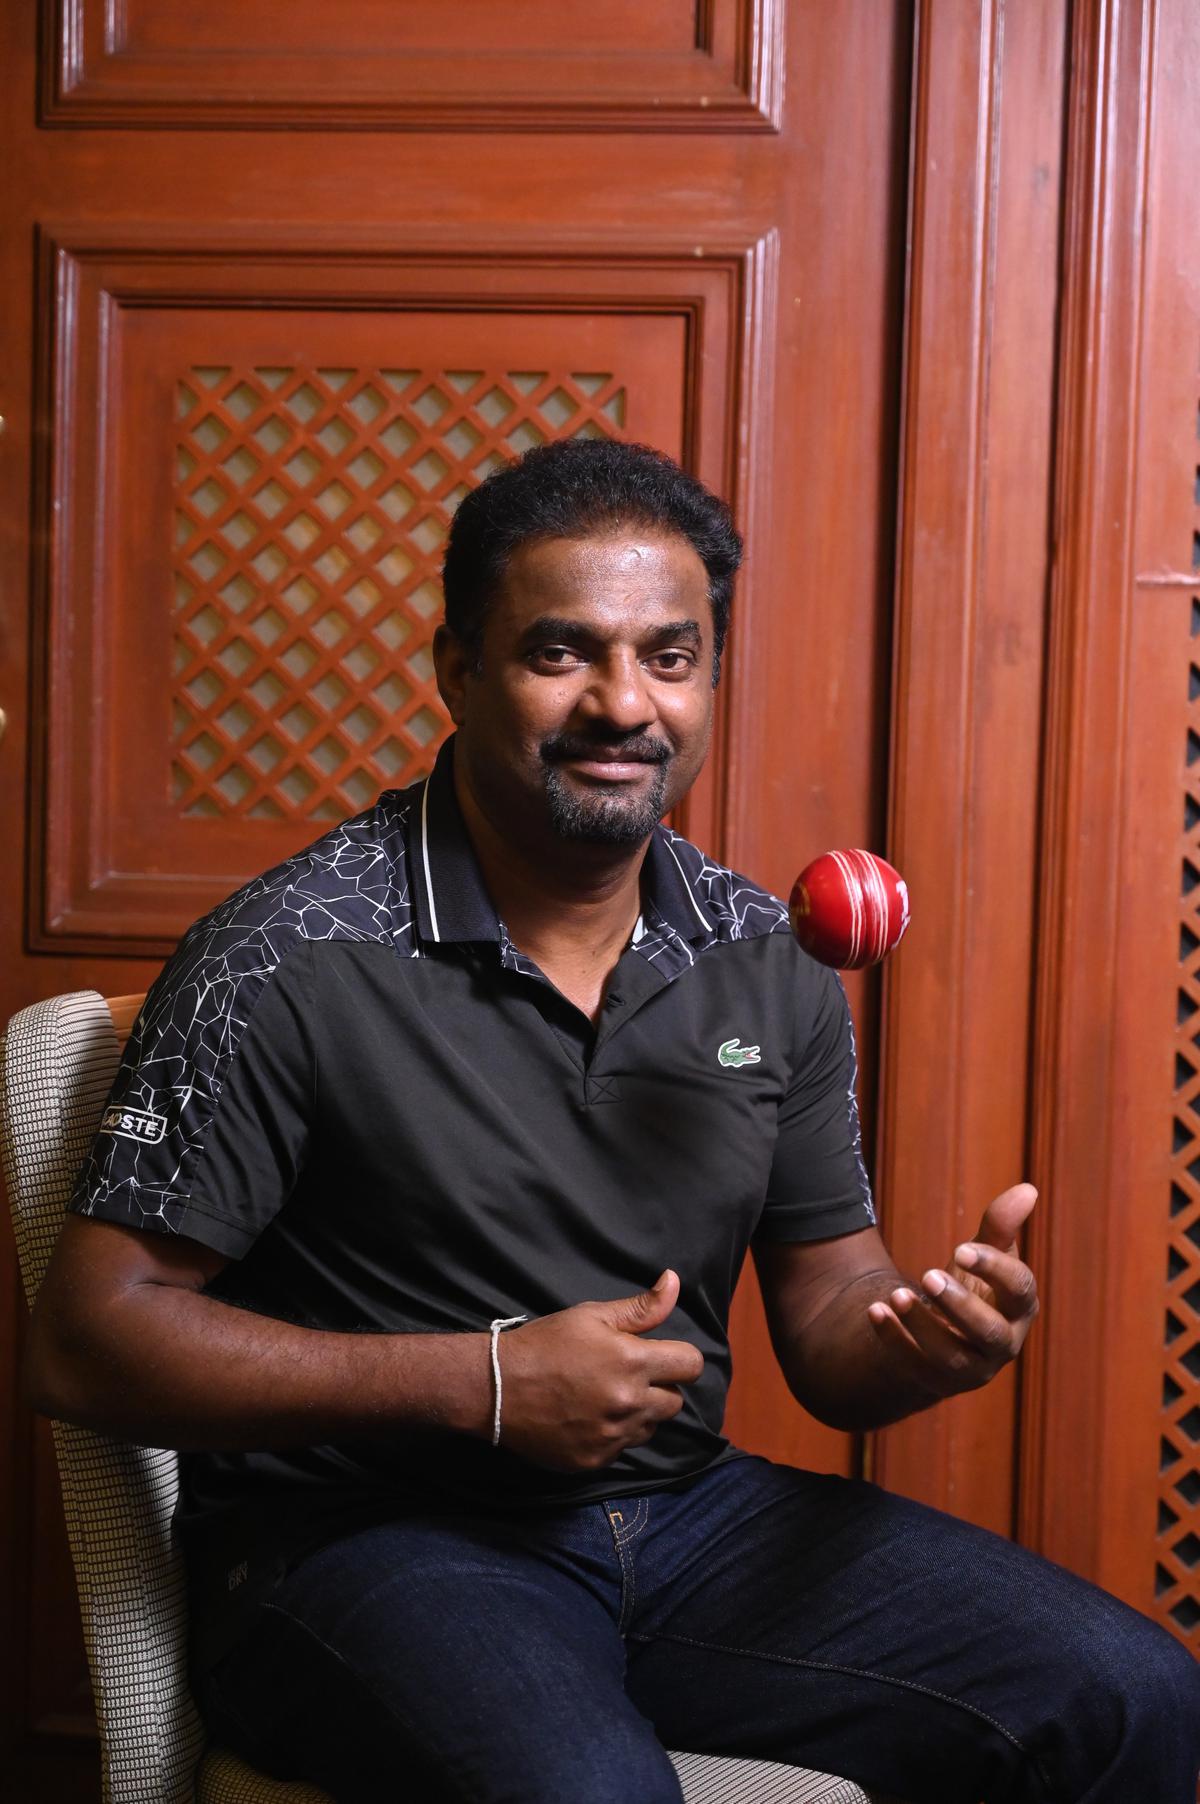 Sri Lankan cricketer Muthiah Muralidharan in Chennai